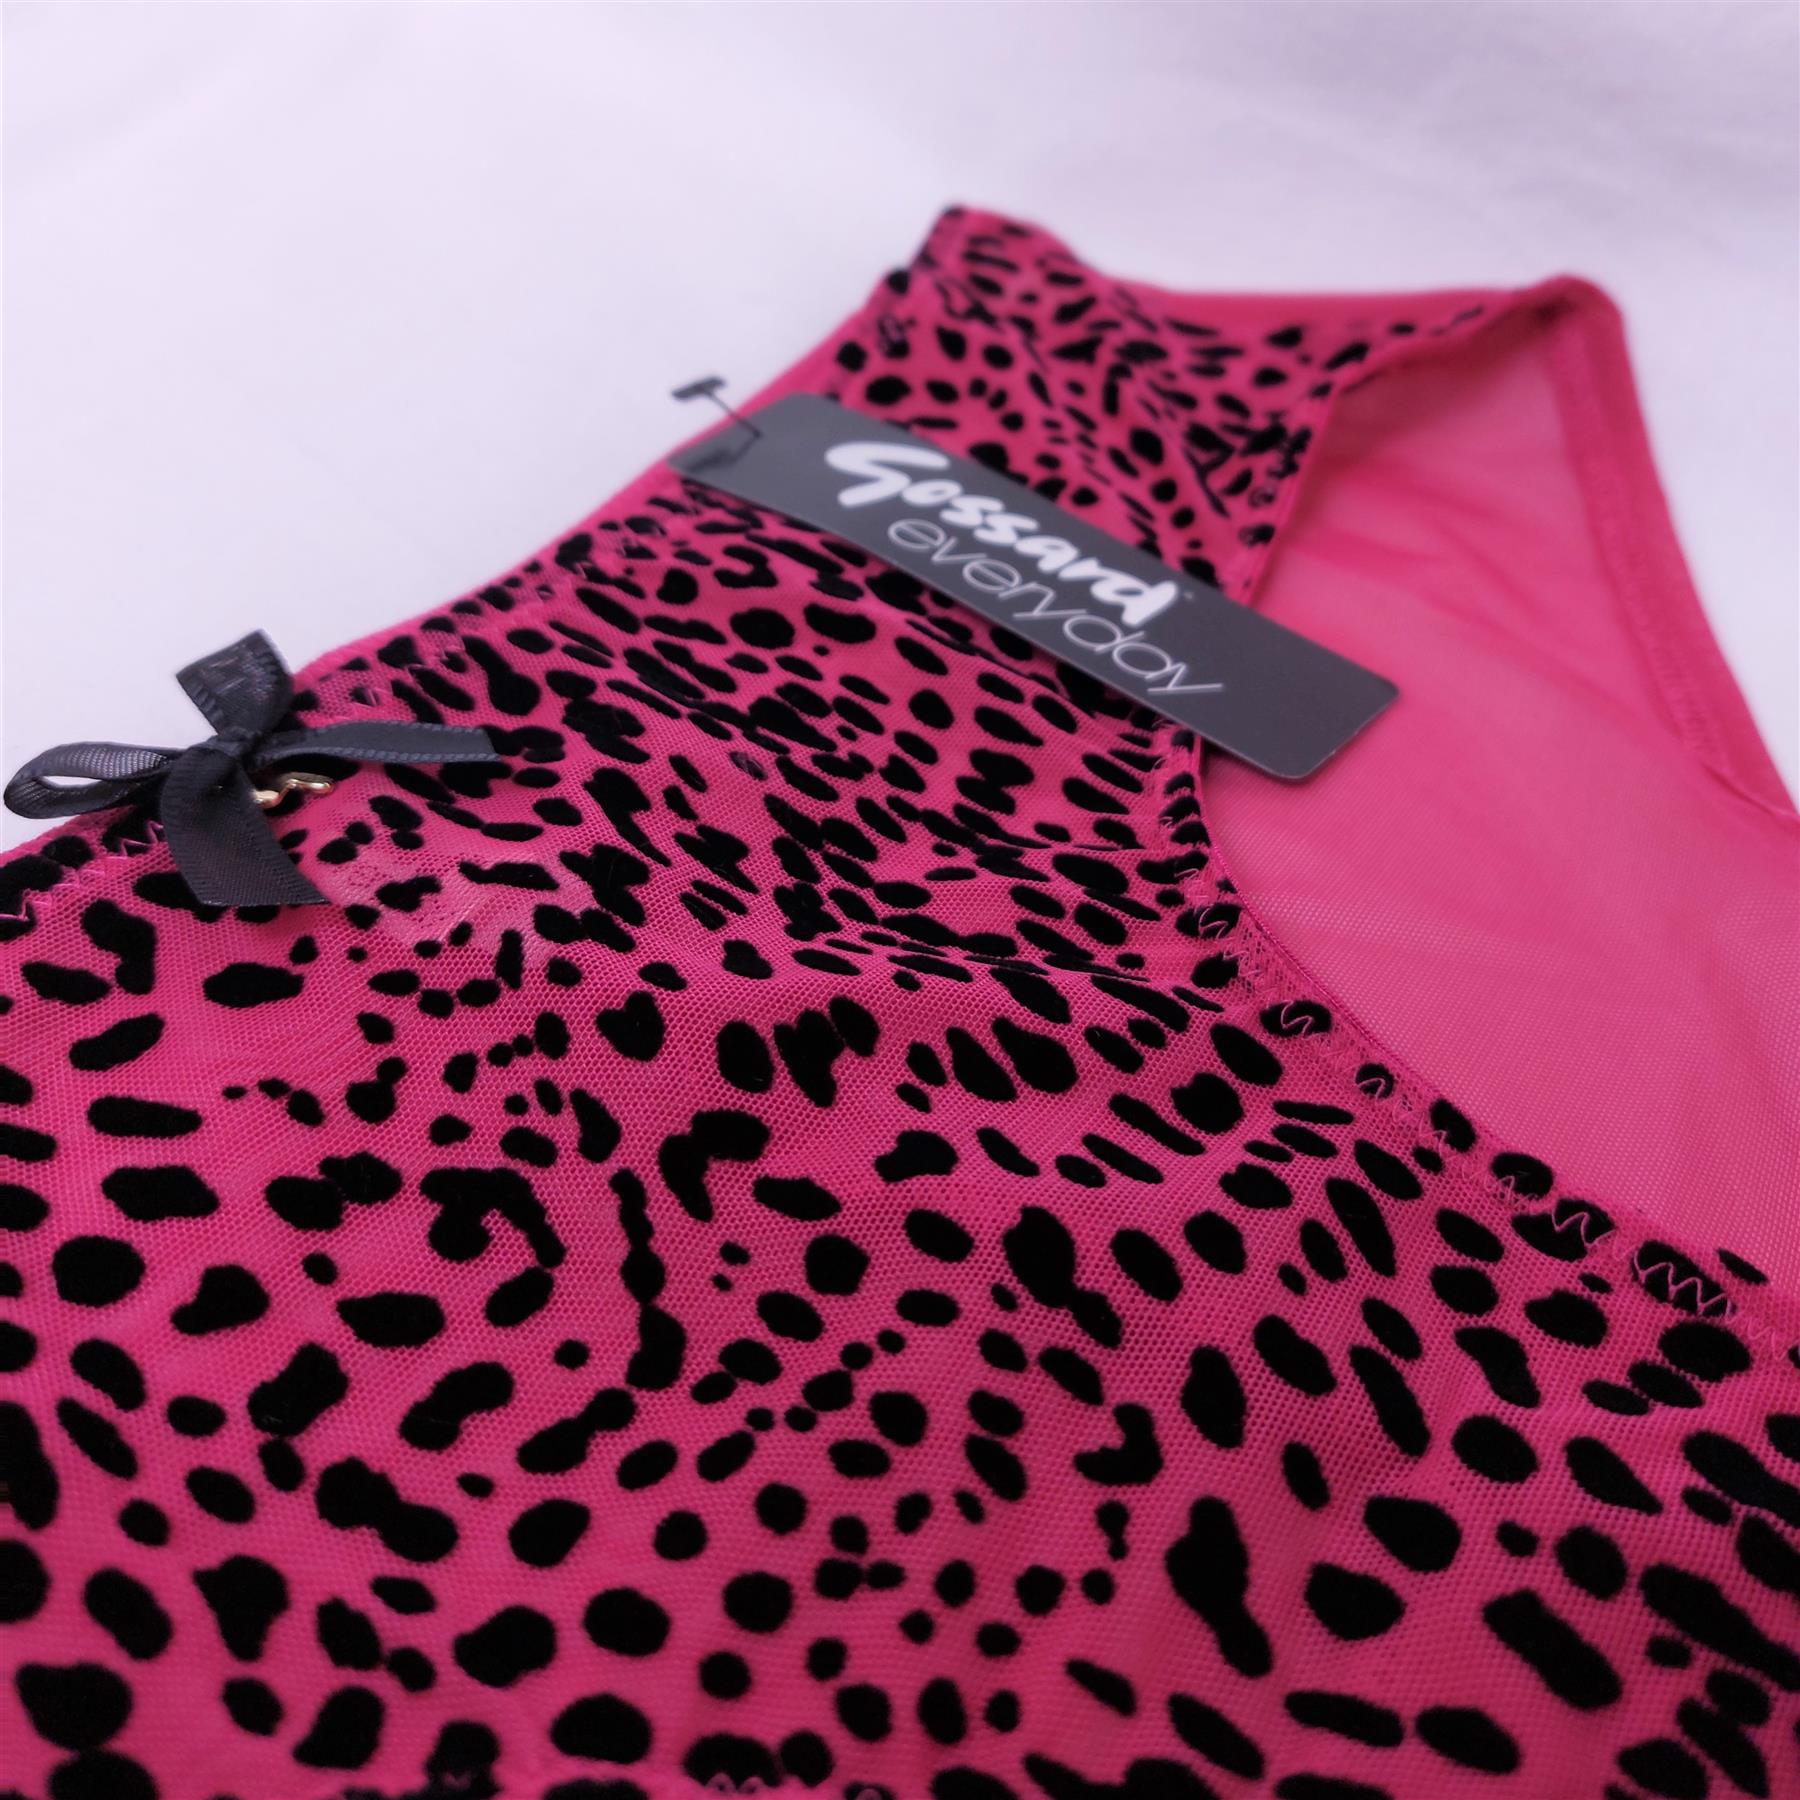 Glossies Leopard Short - Animal Print